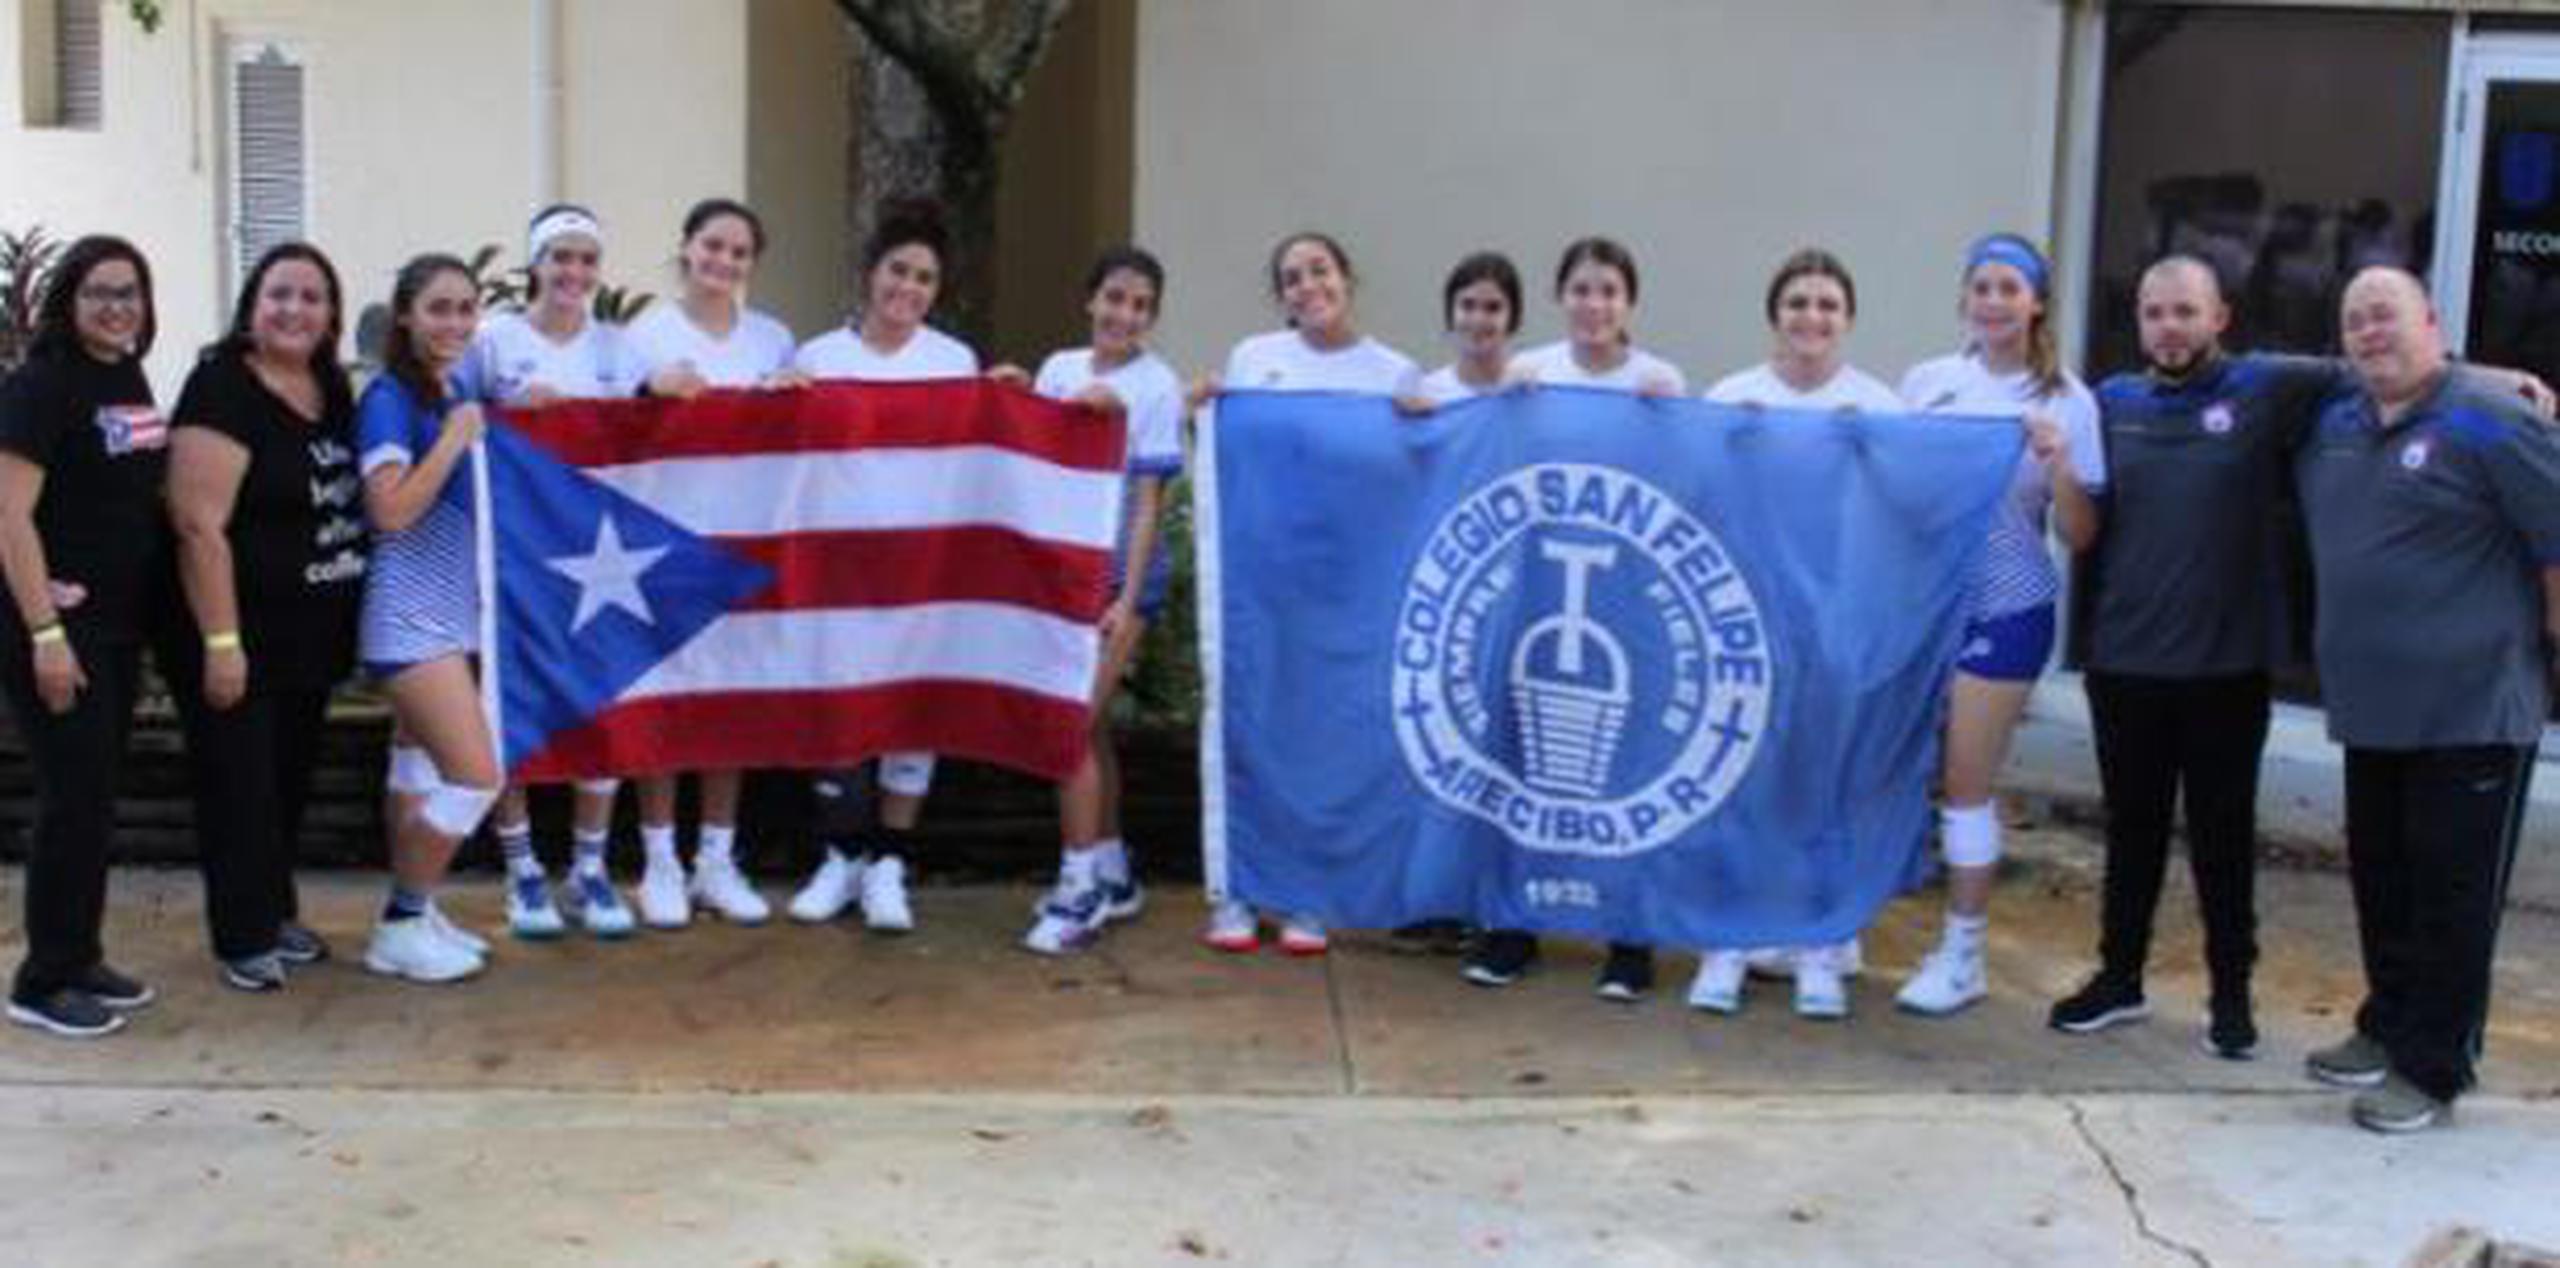 Equipo de voleibol senior femenino del Colegio San Felipe en Arecibo. (Suministrada)